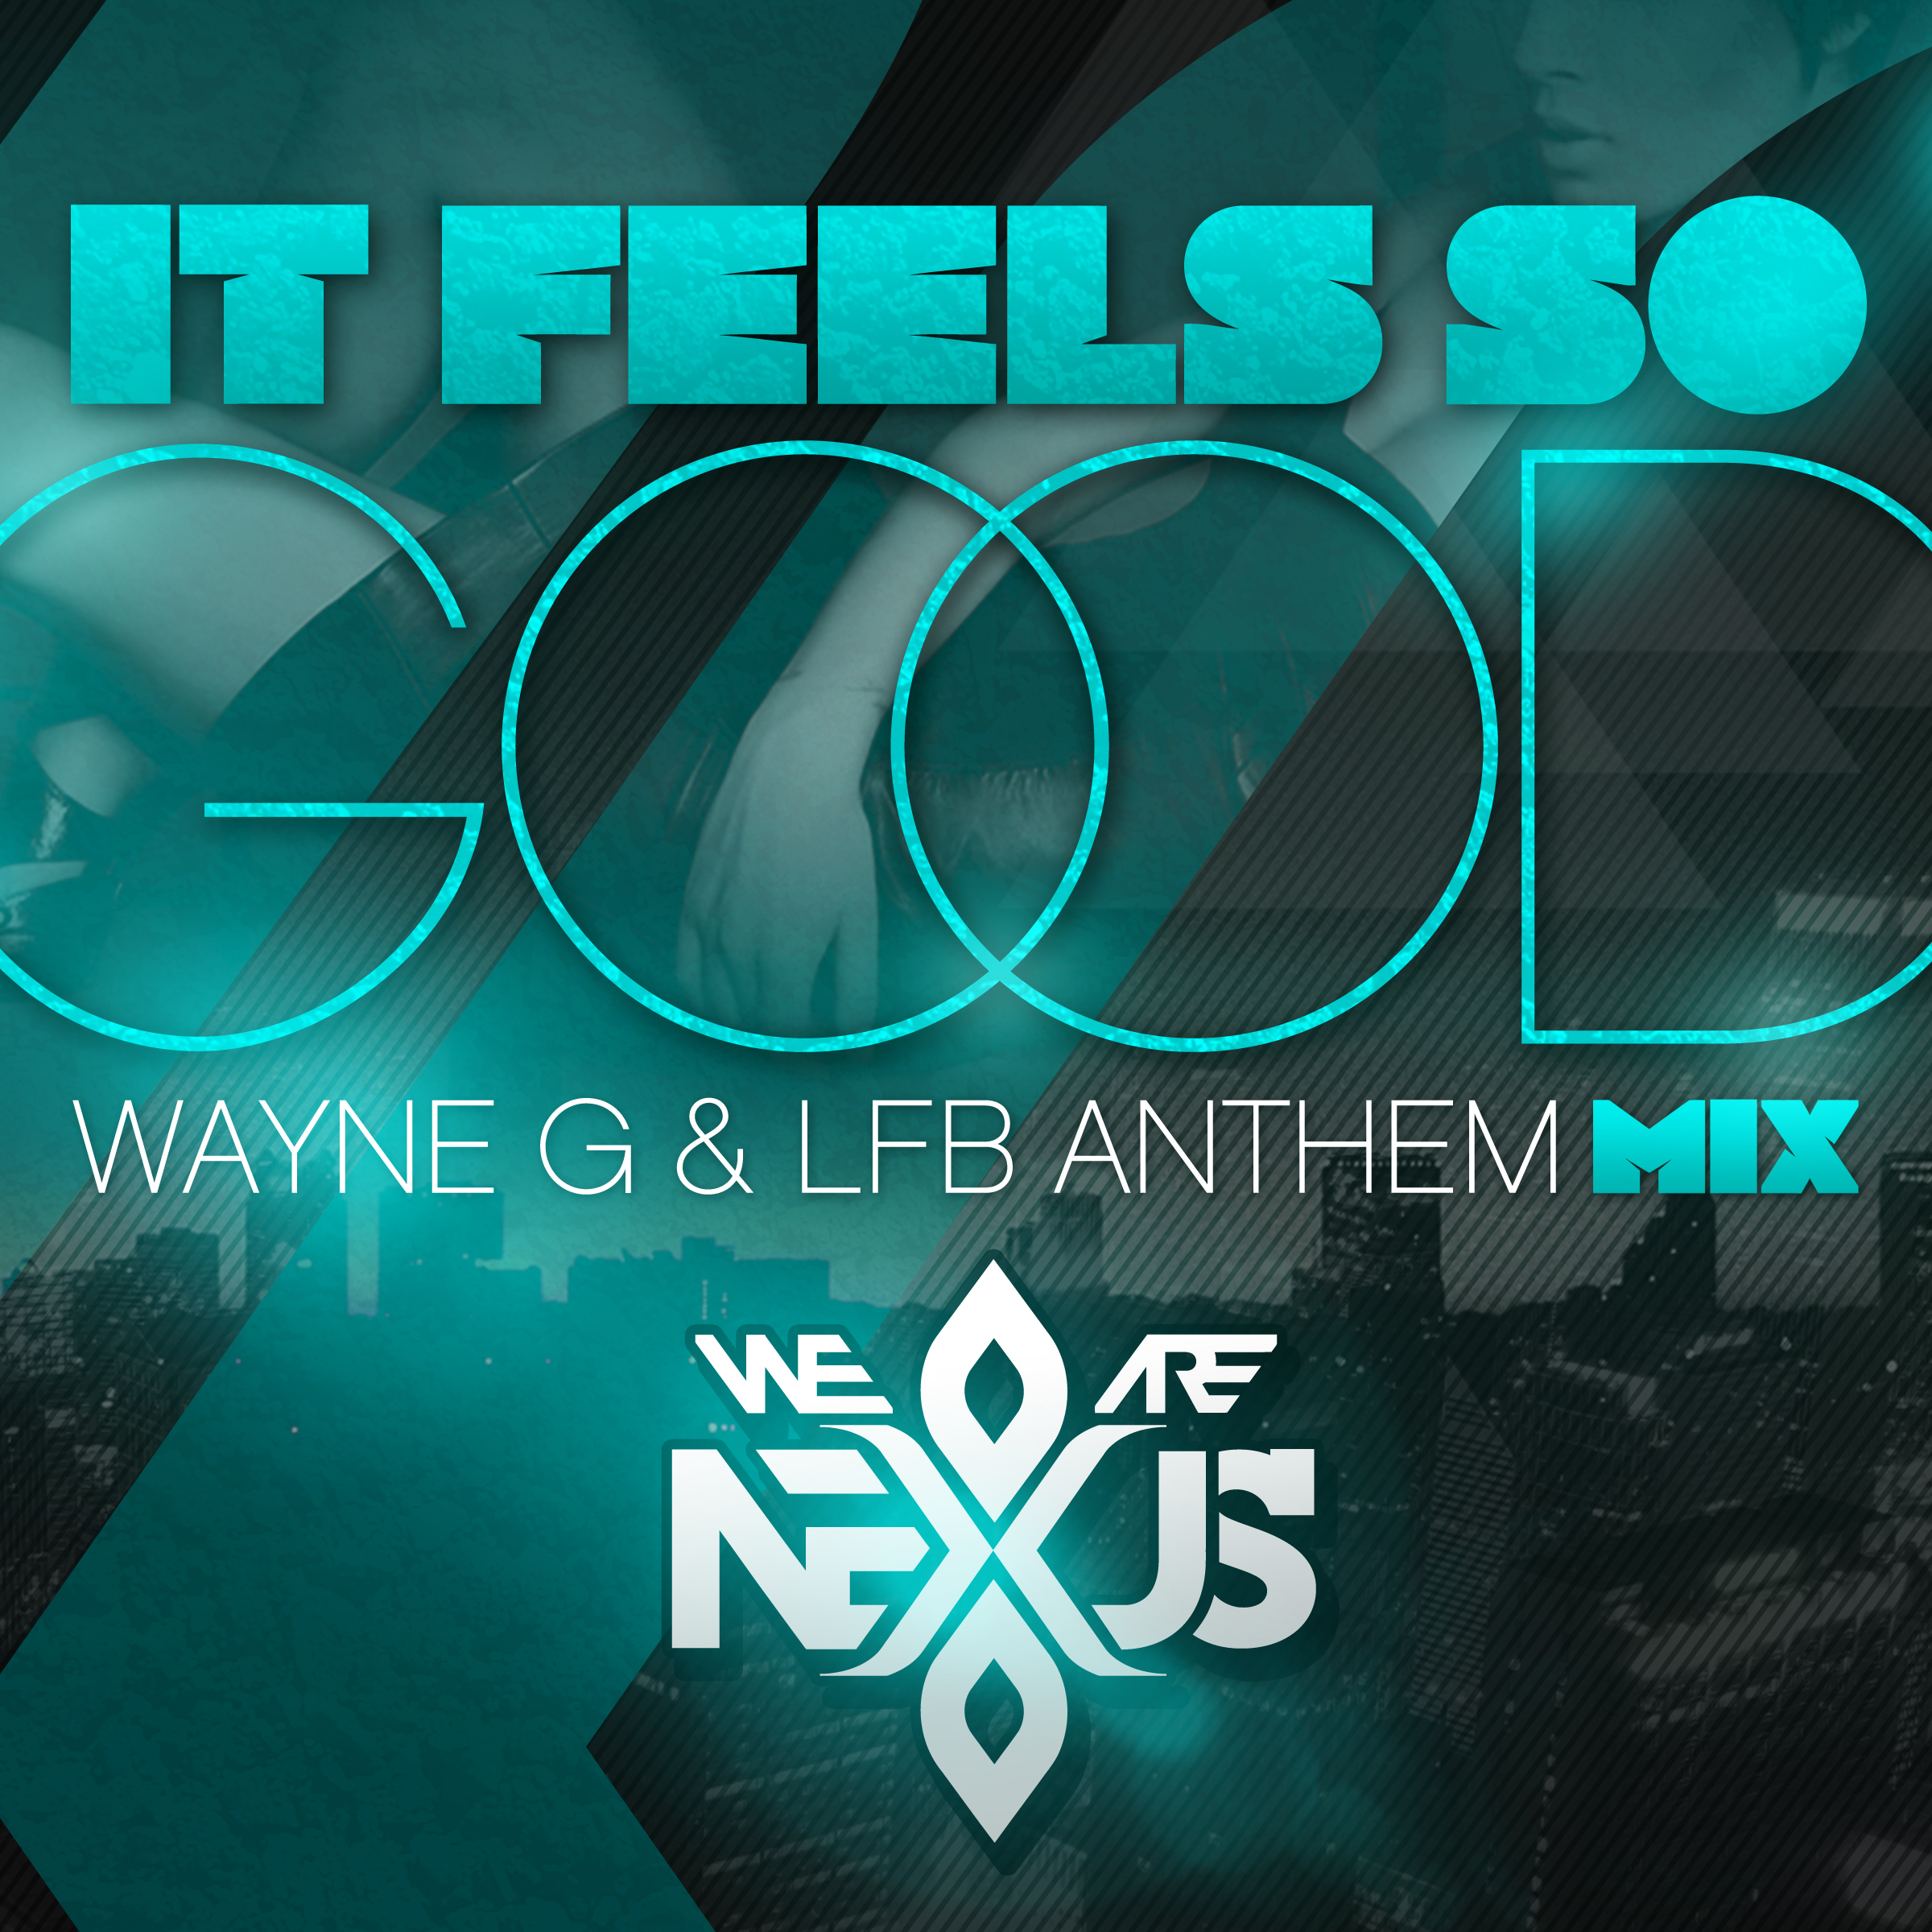 Wayne G & LFB Anthem Mix Cover Art